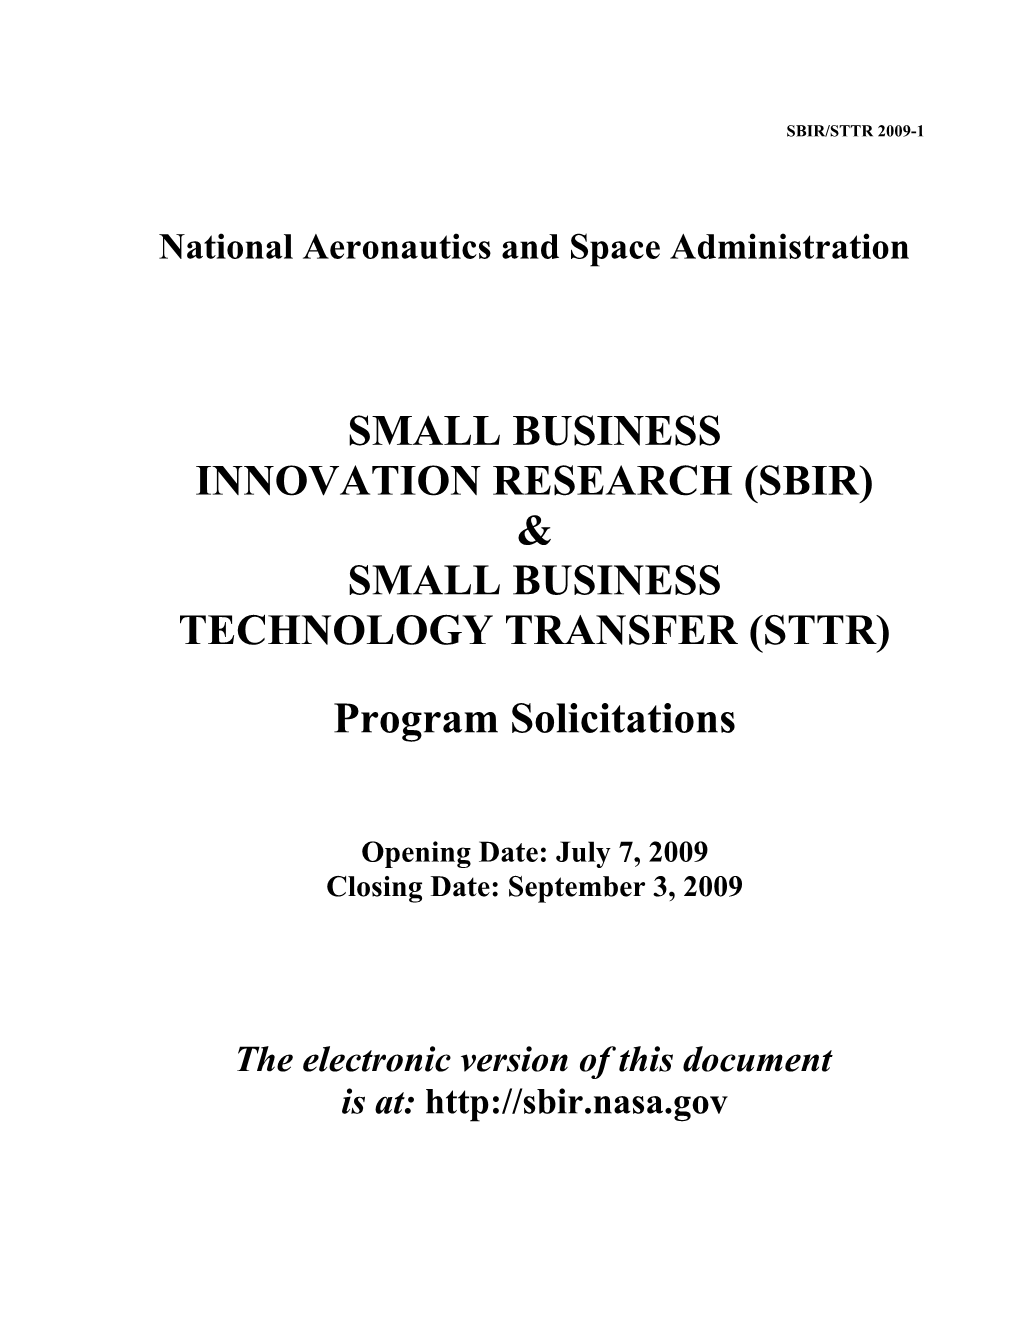 2000 NASA Small Business Innovation Research Program Solicitation